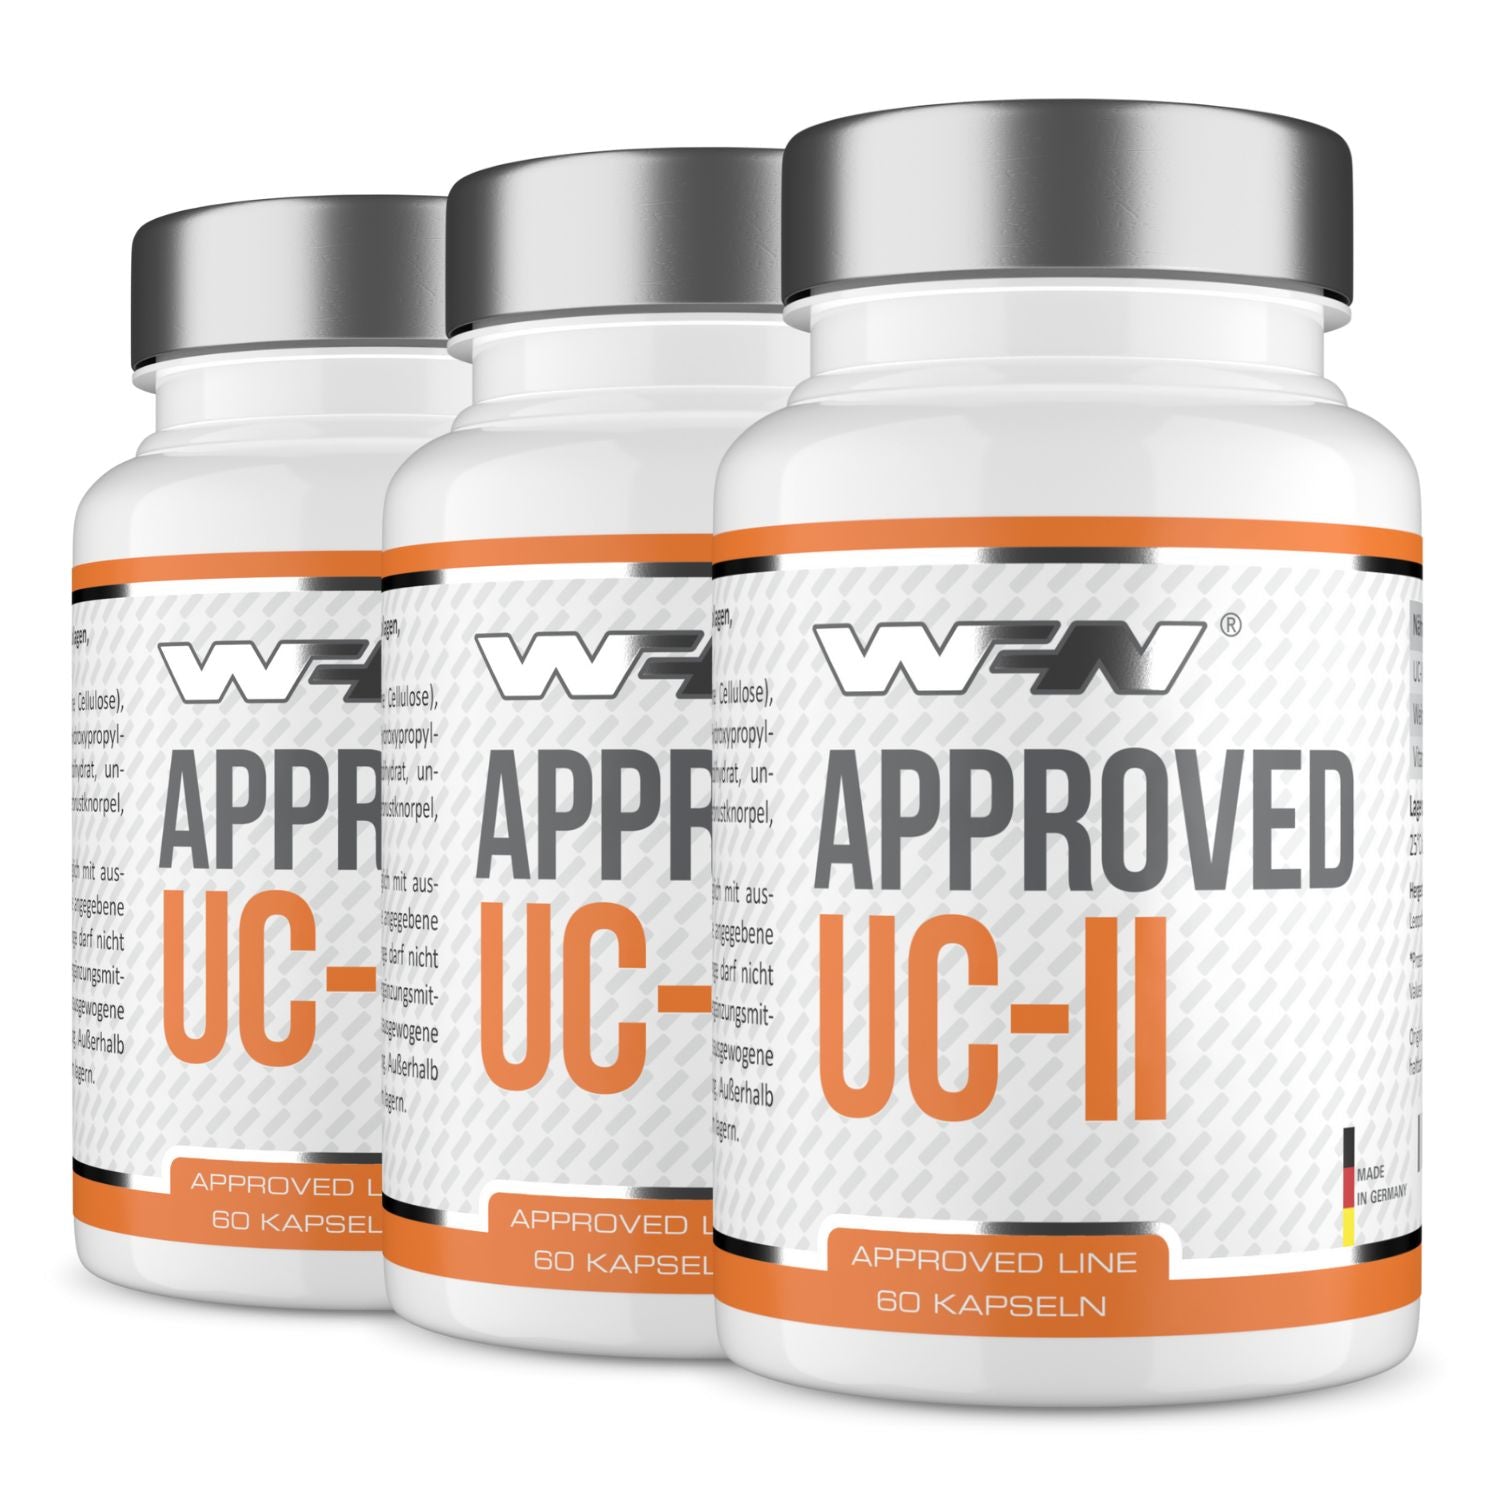 Approved UC-II